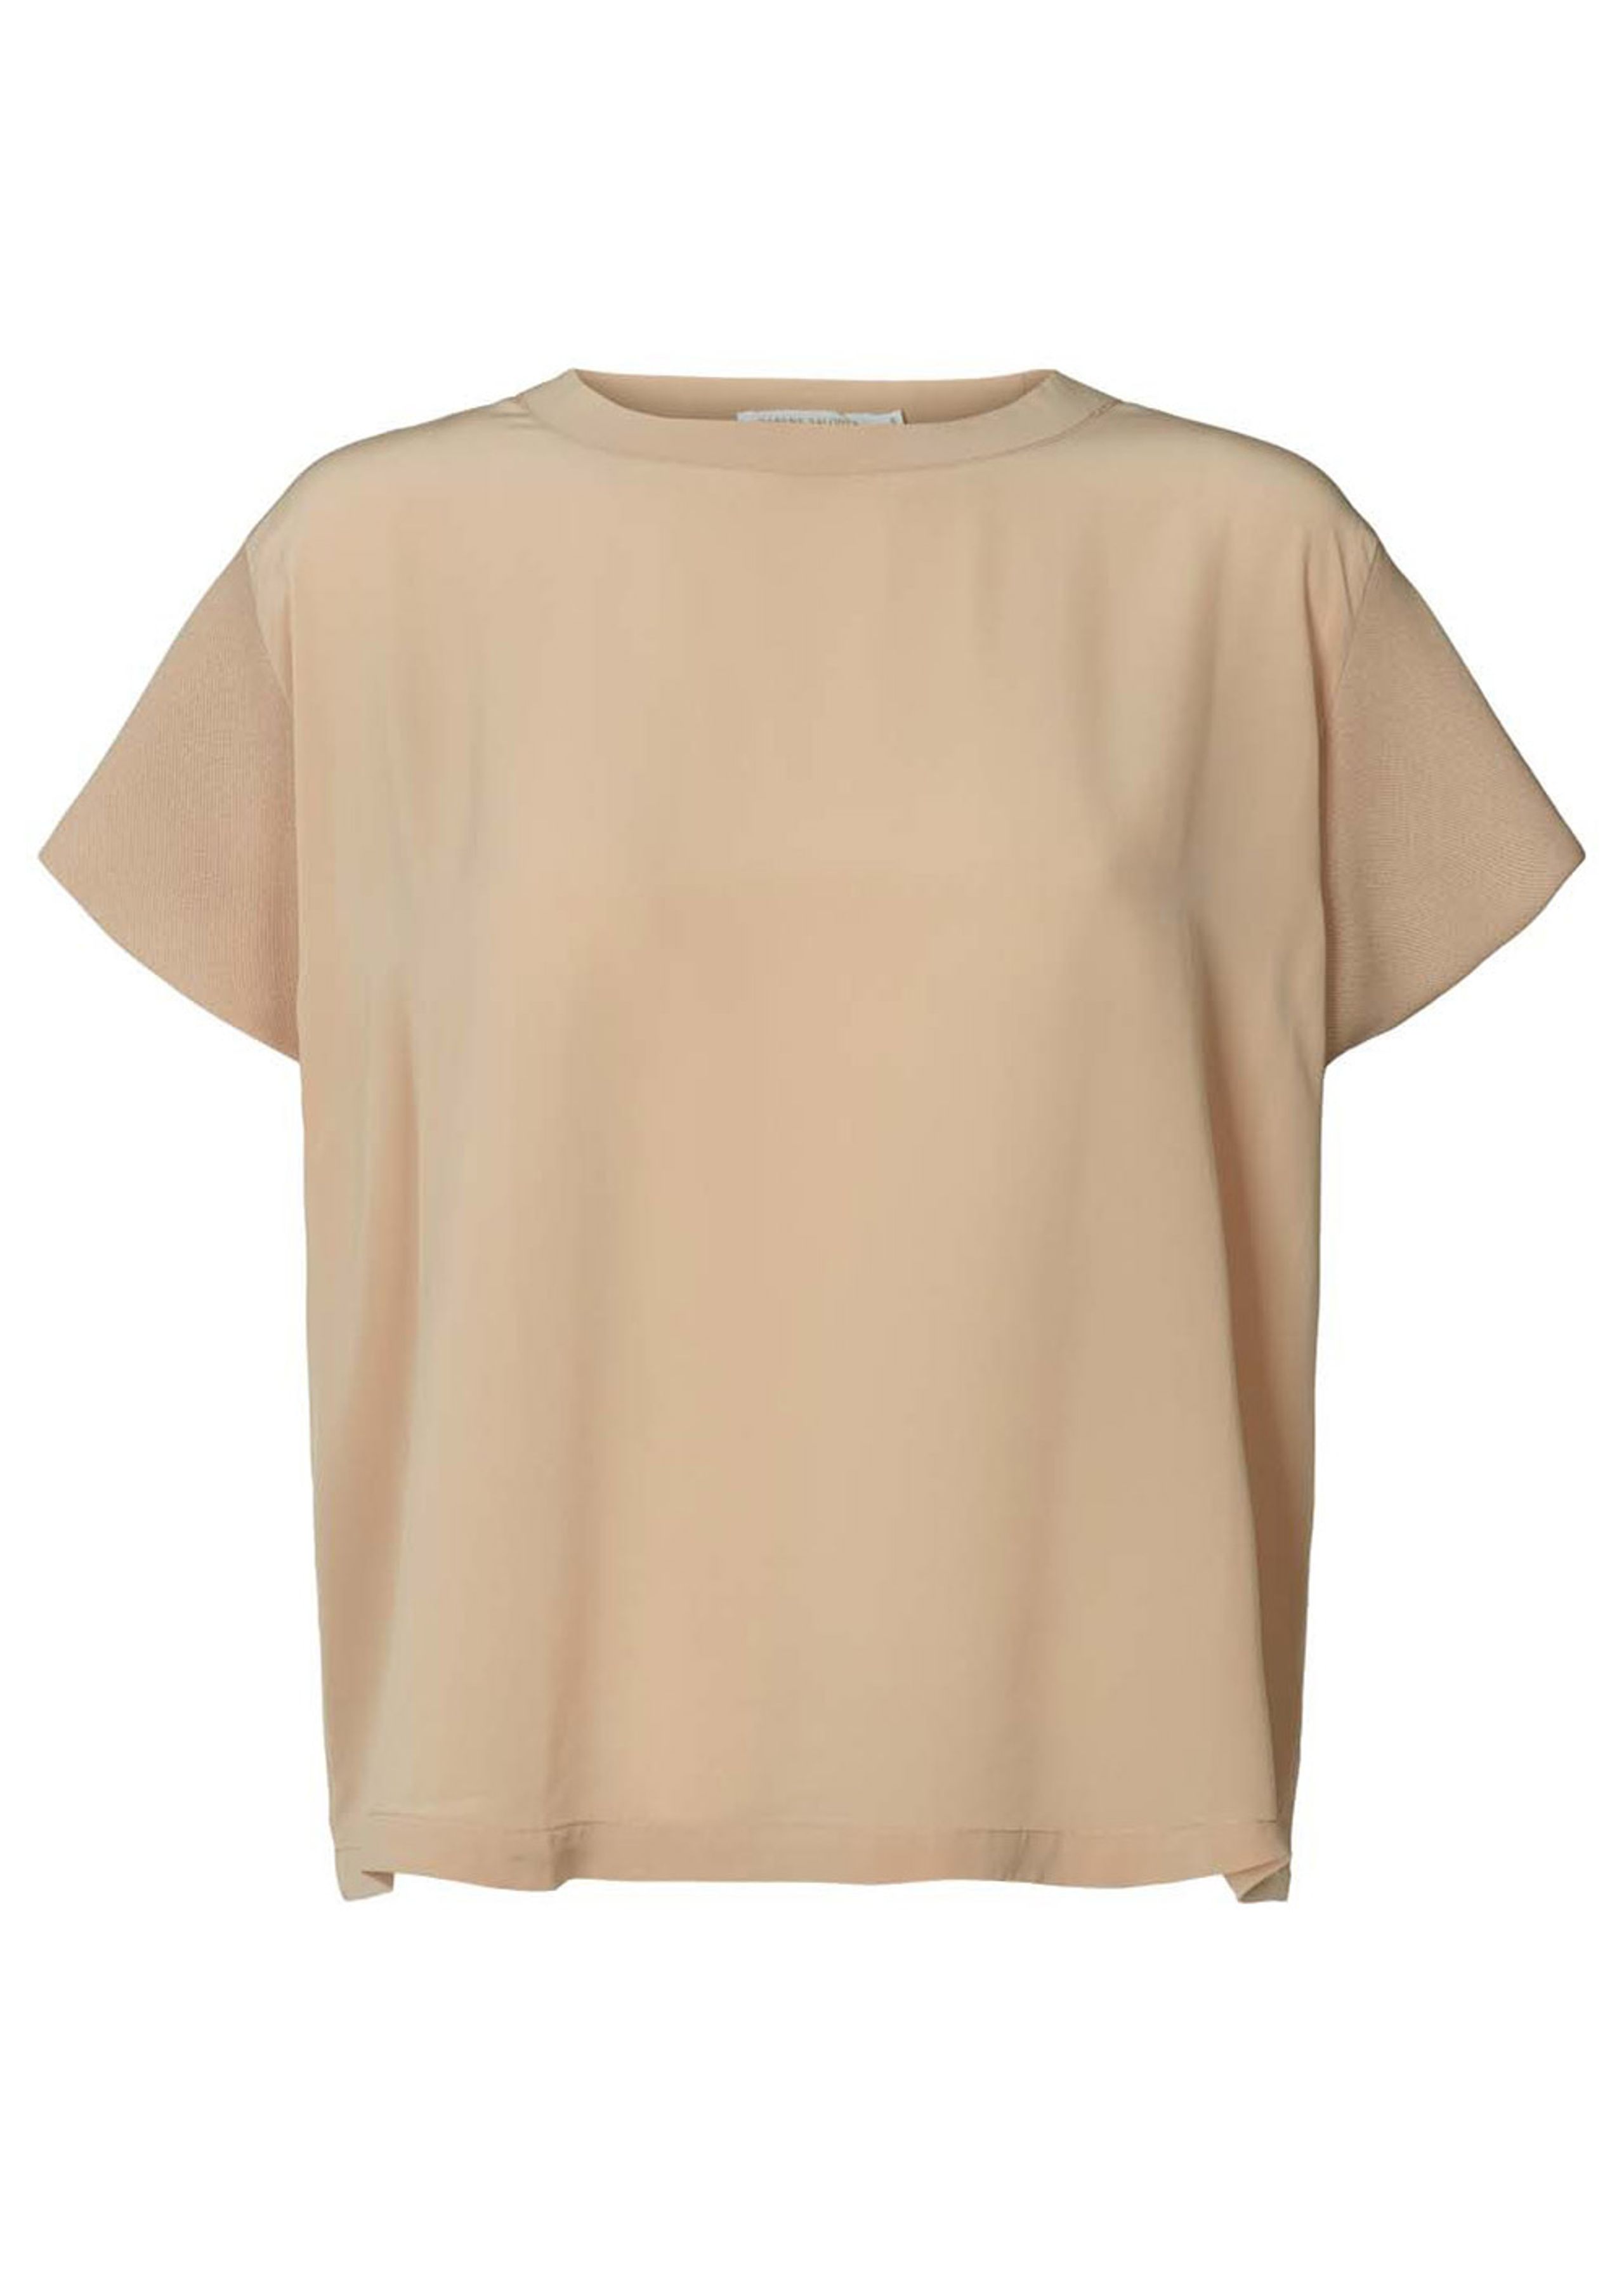 Rabens Saloner - T-shirt - Bjanka - Sheer Panel Tee - Sandstone